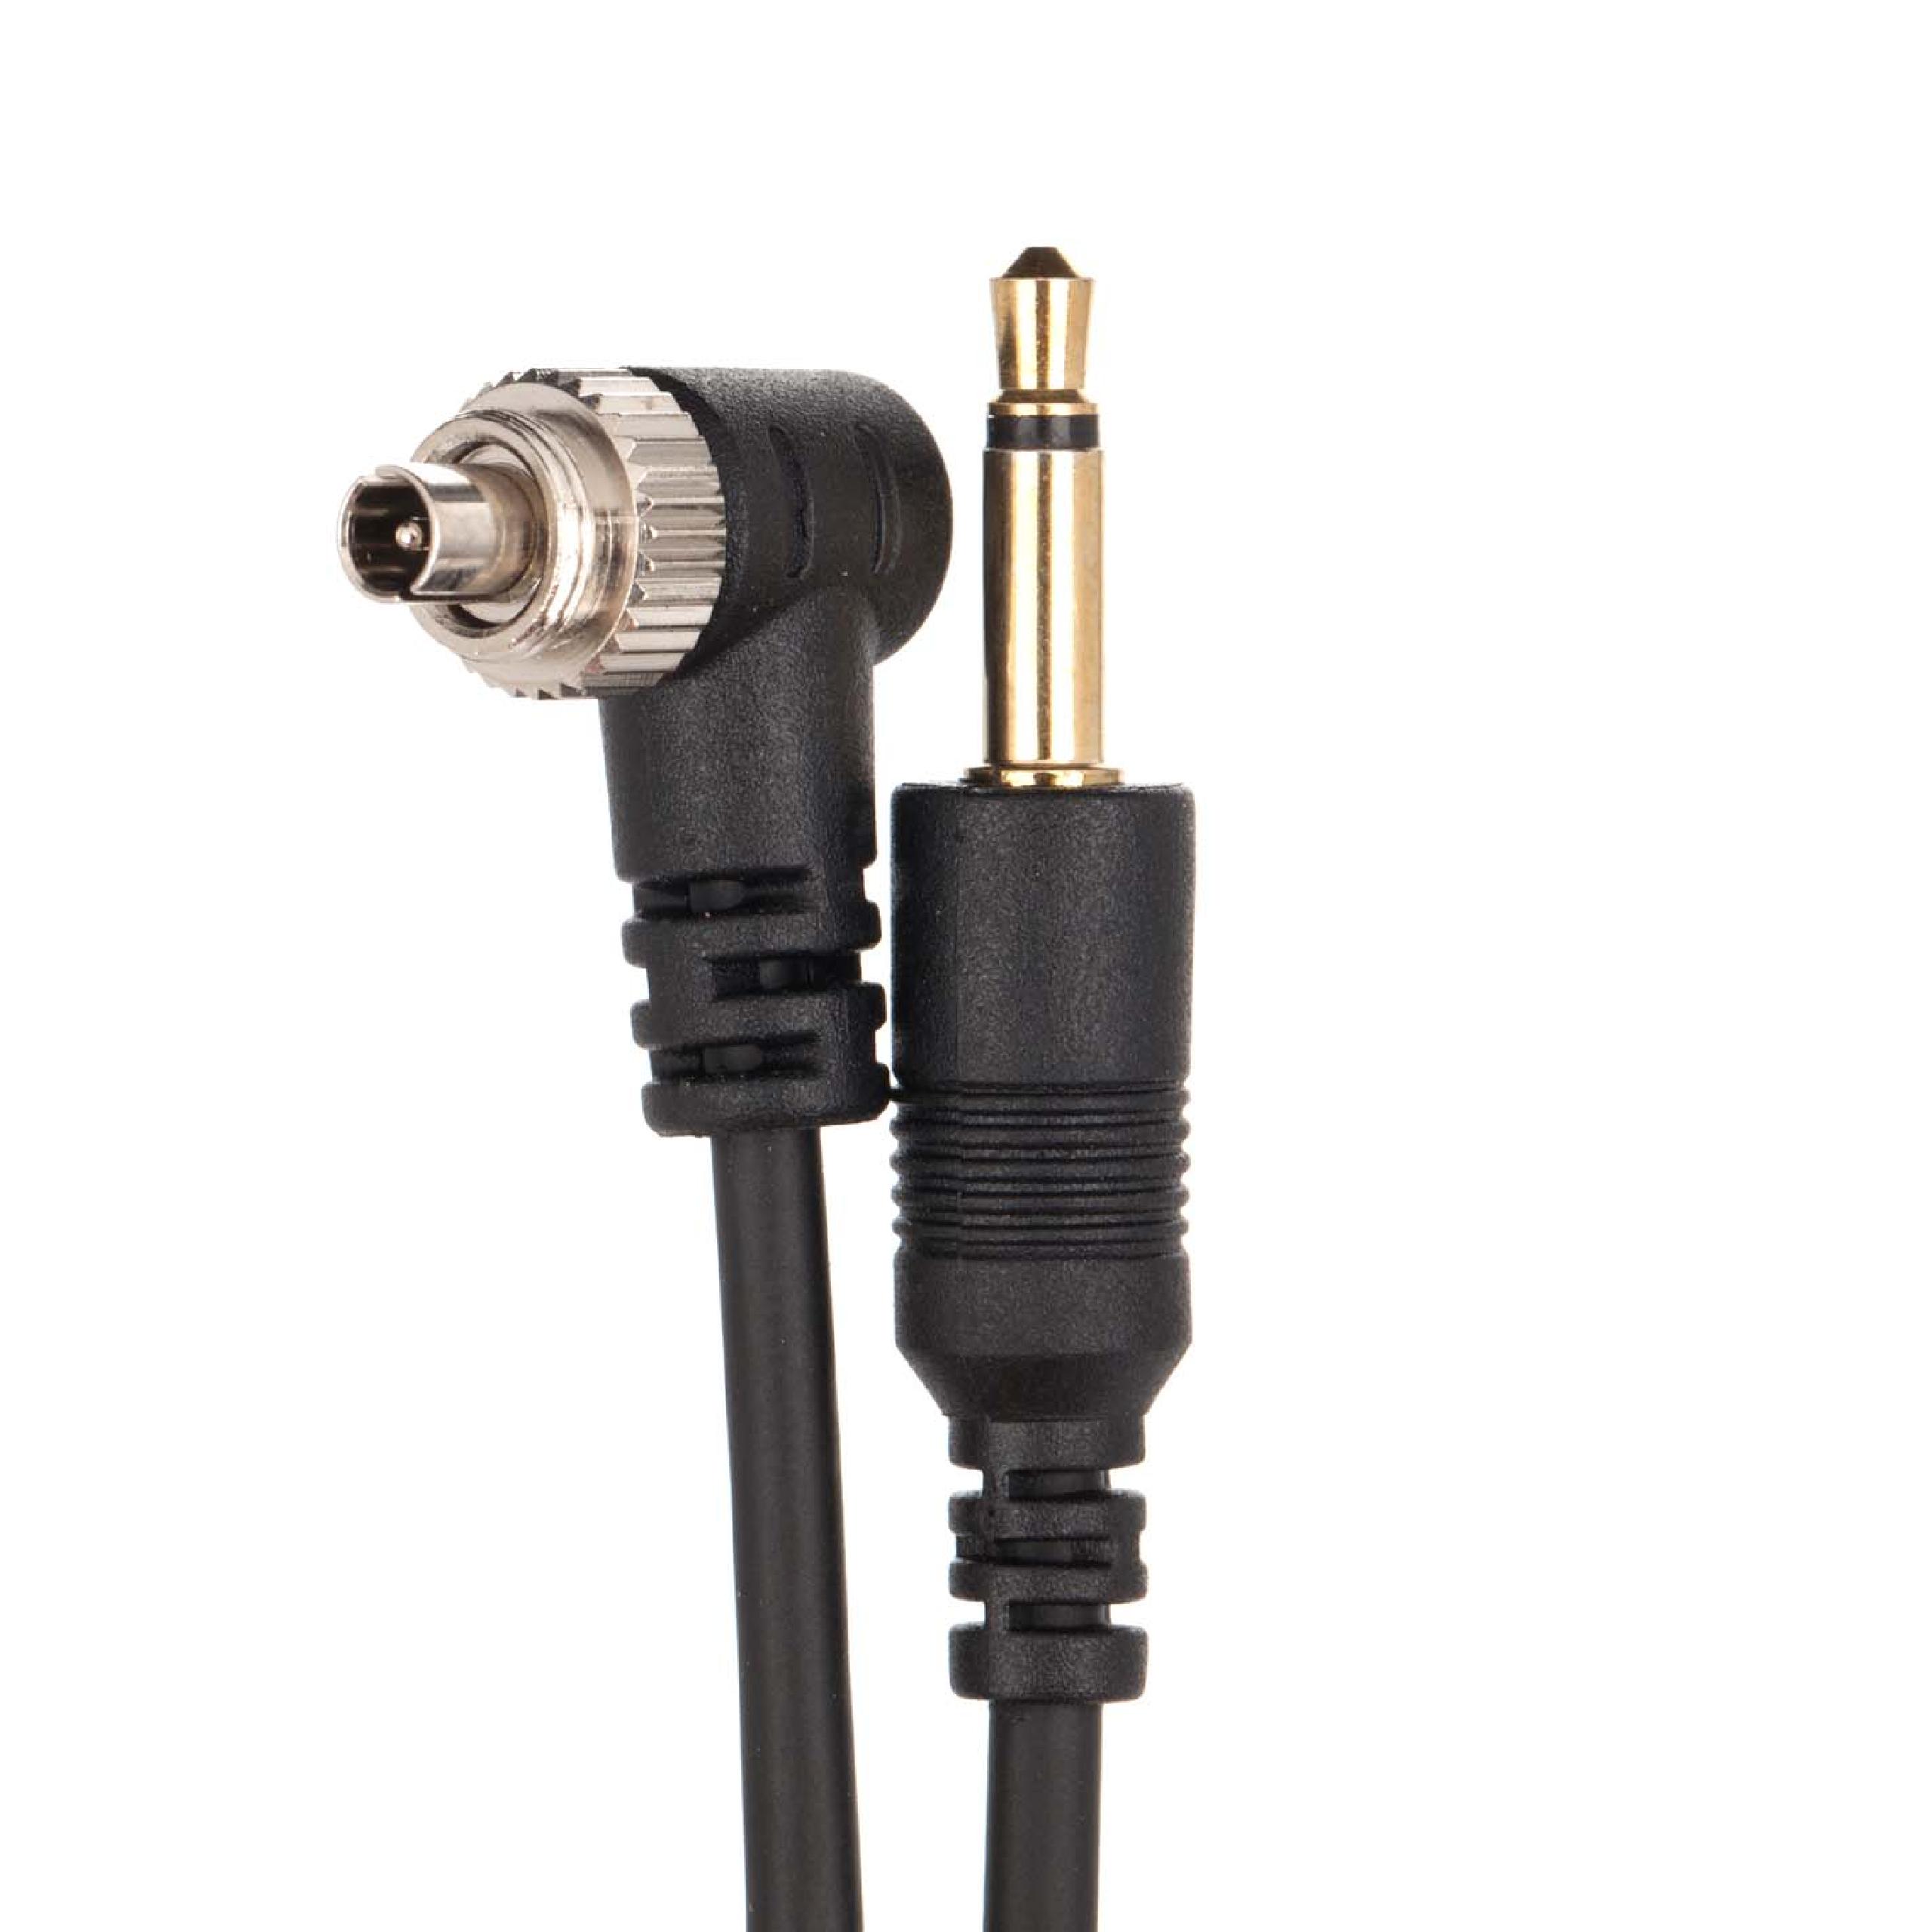 Flash PC sync cable, cord for 3.5mm suitable for Nikon studio flash lighting, external flash unit etc